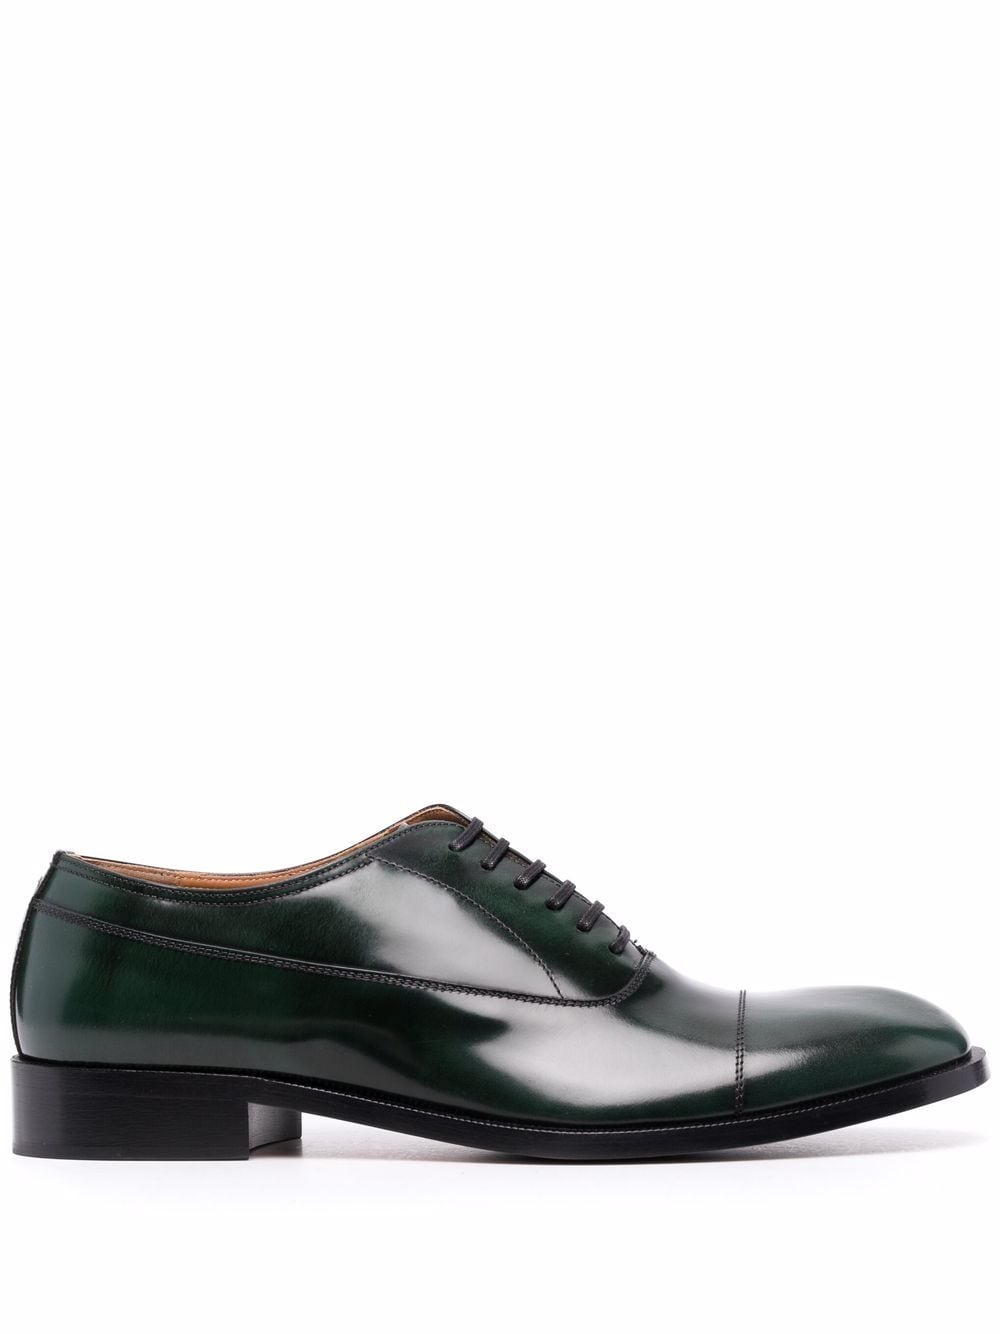 Maison Margiela waxed leather Oxford shoes - Green von Maison Margiela